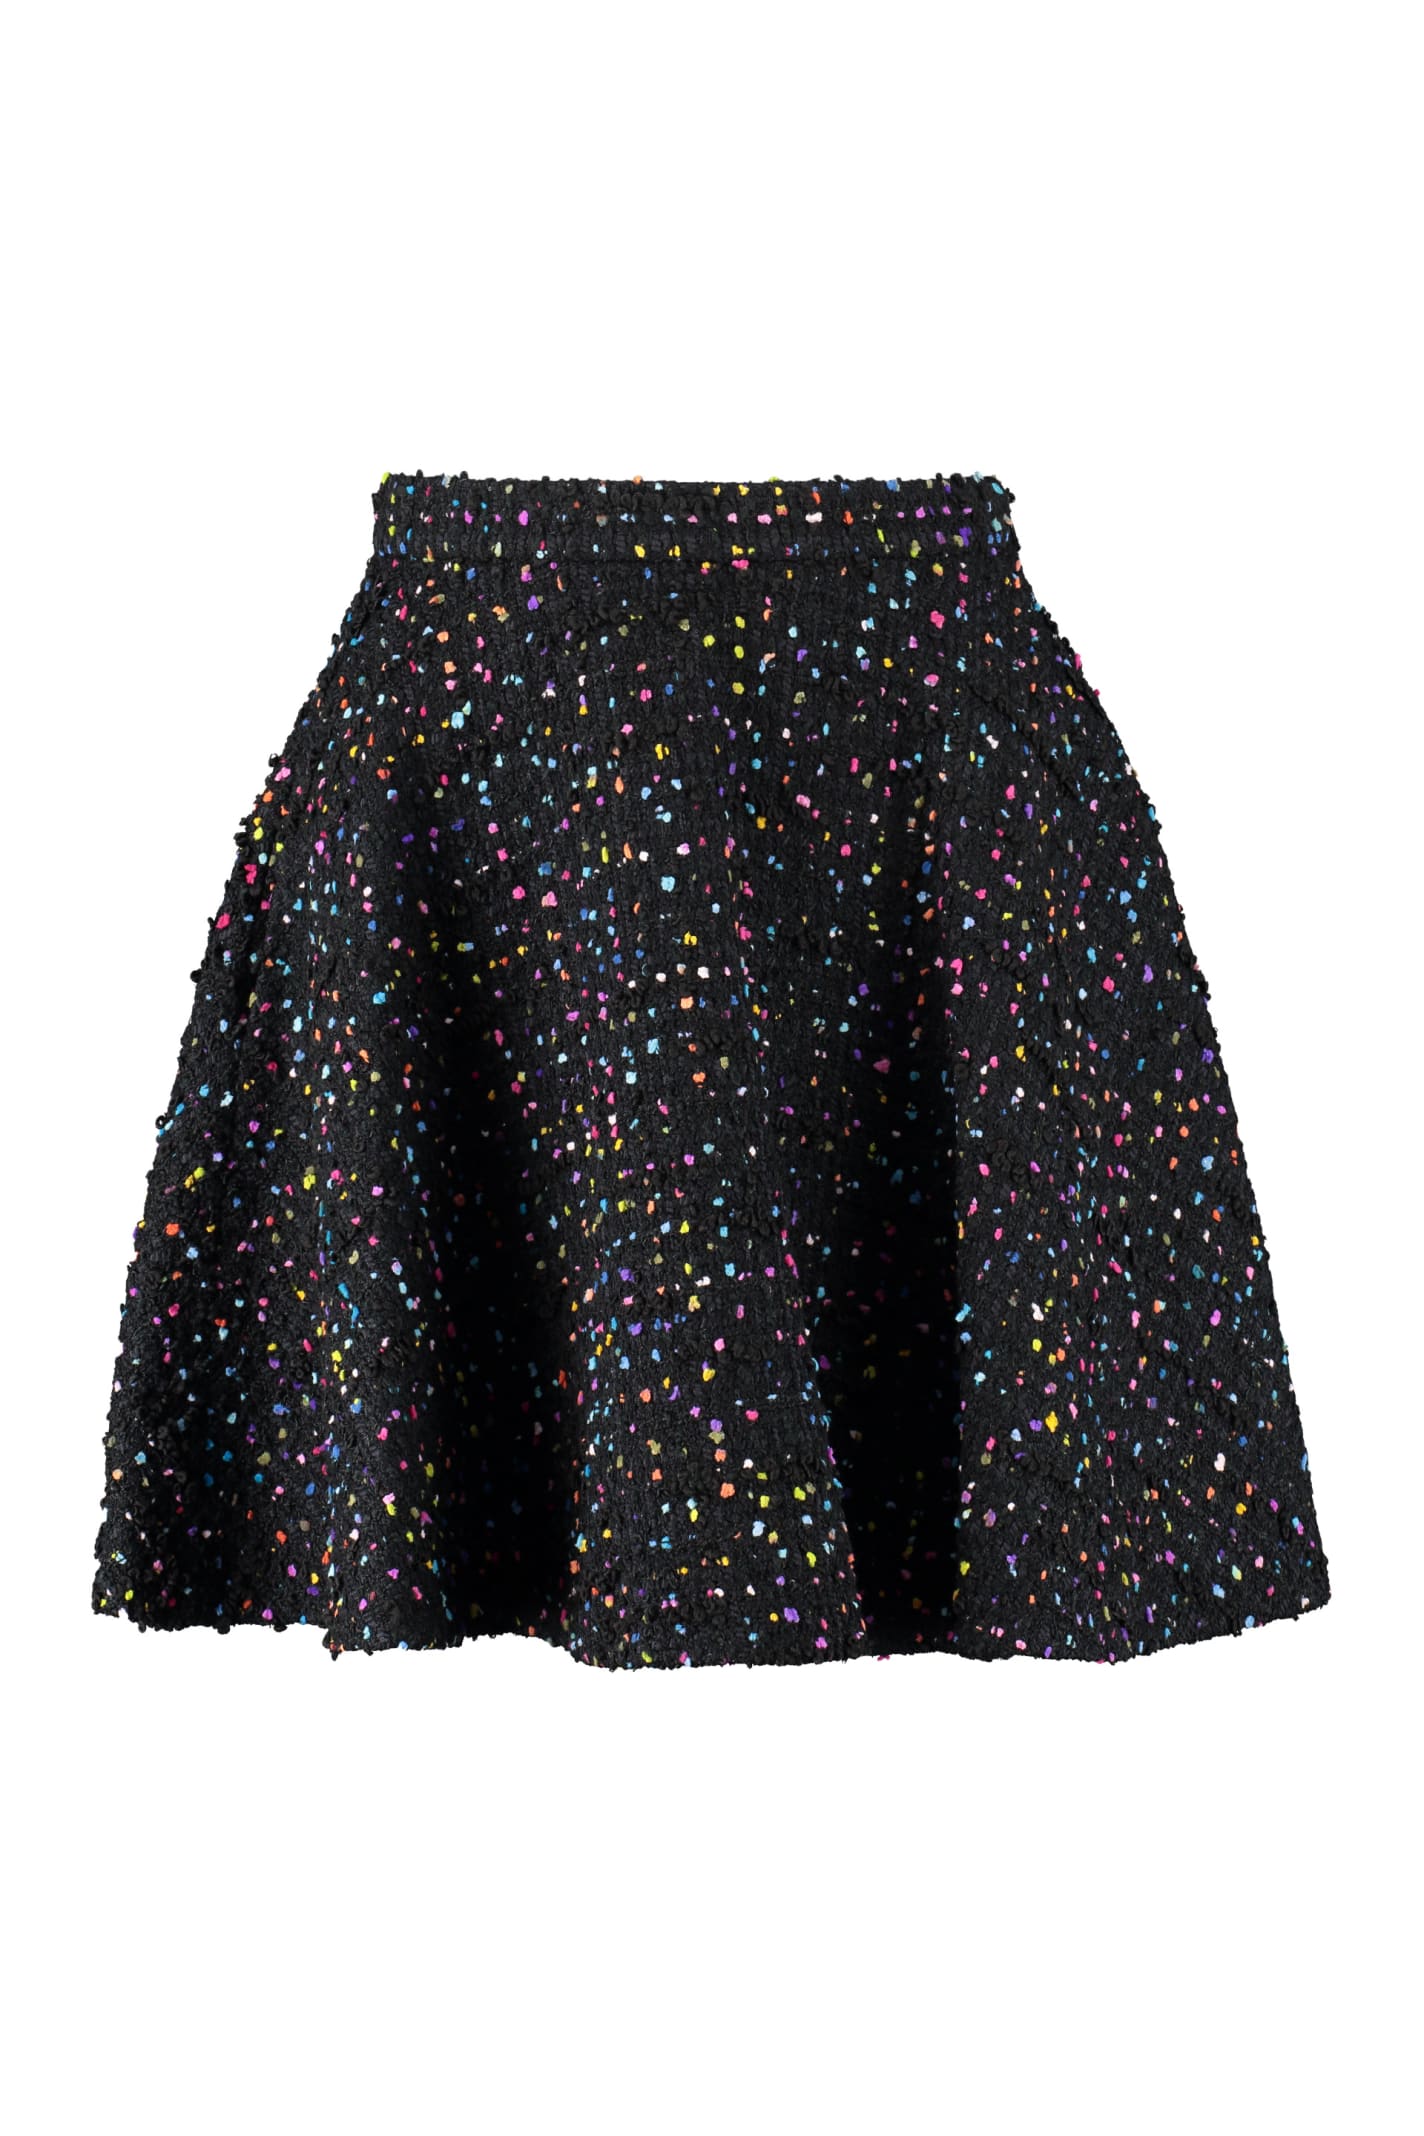 Valentino Full Skirt